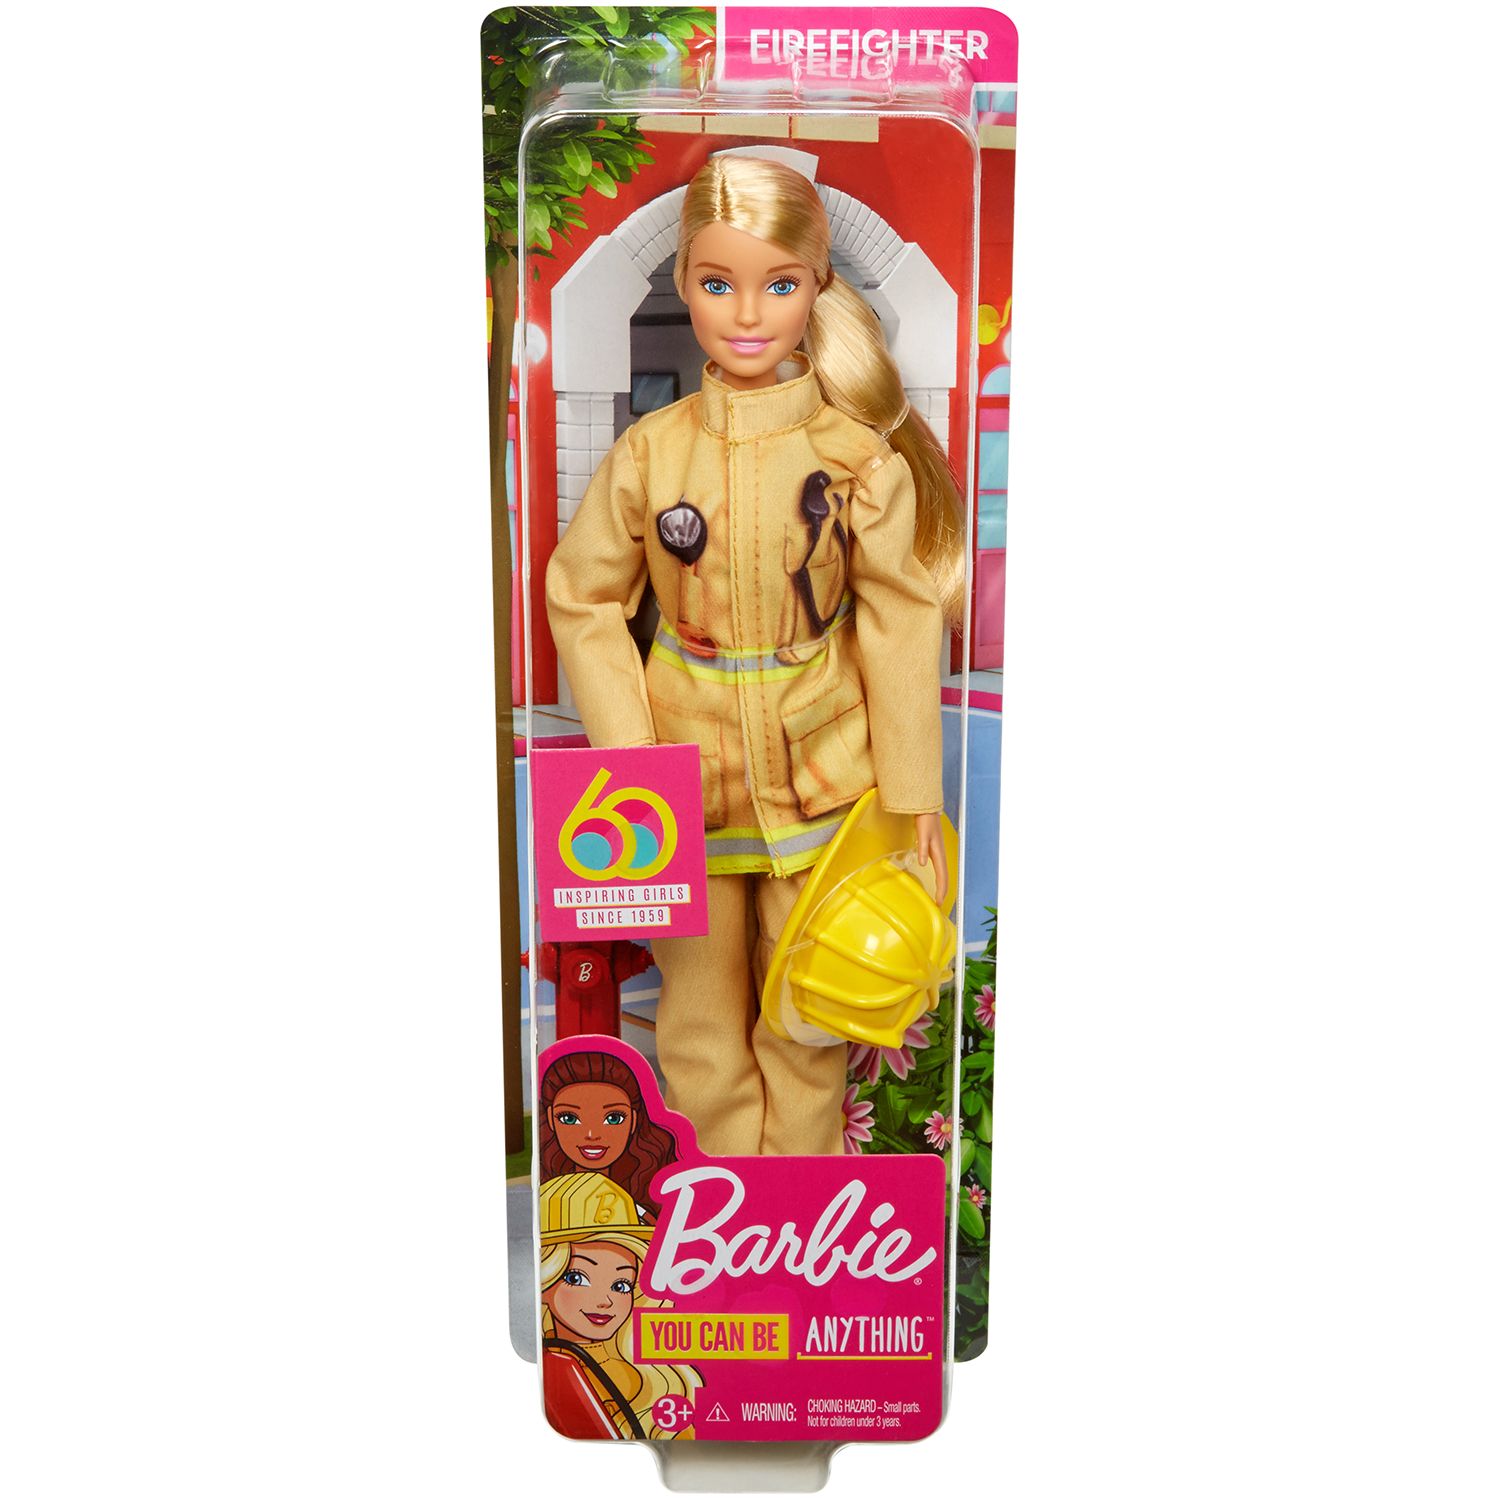 fireman barbie doll